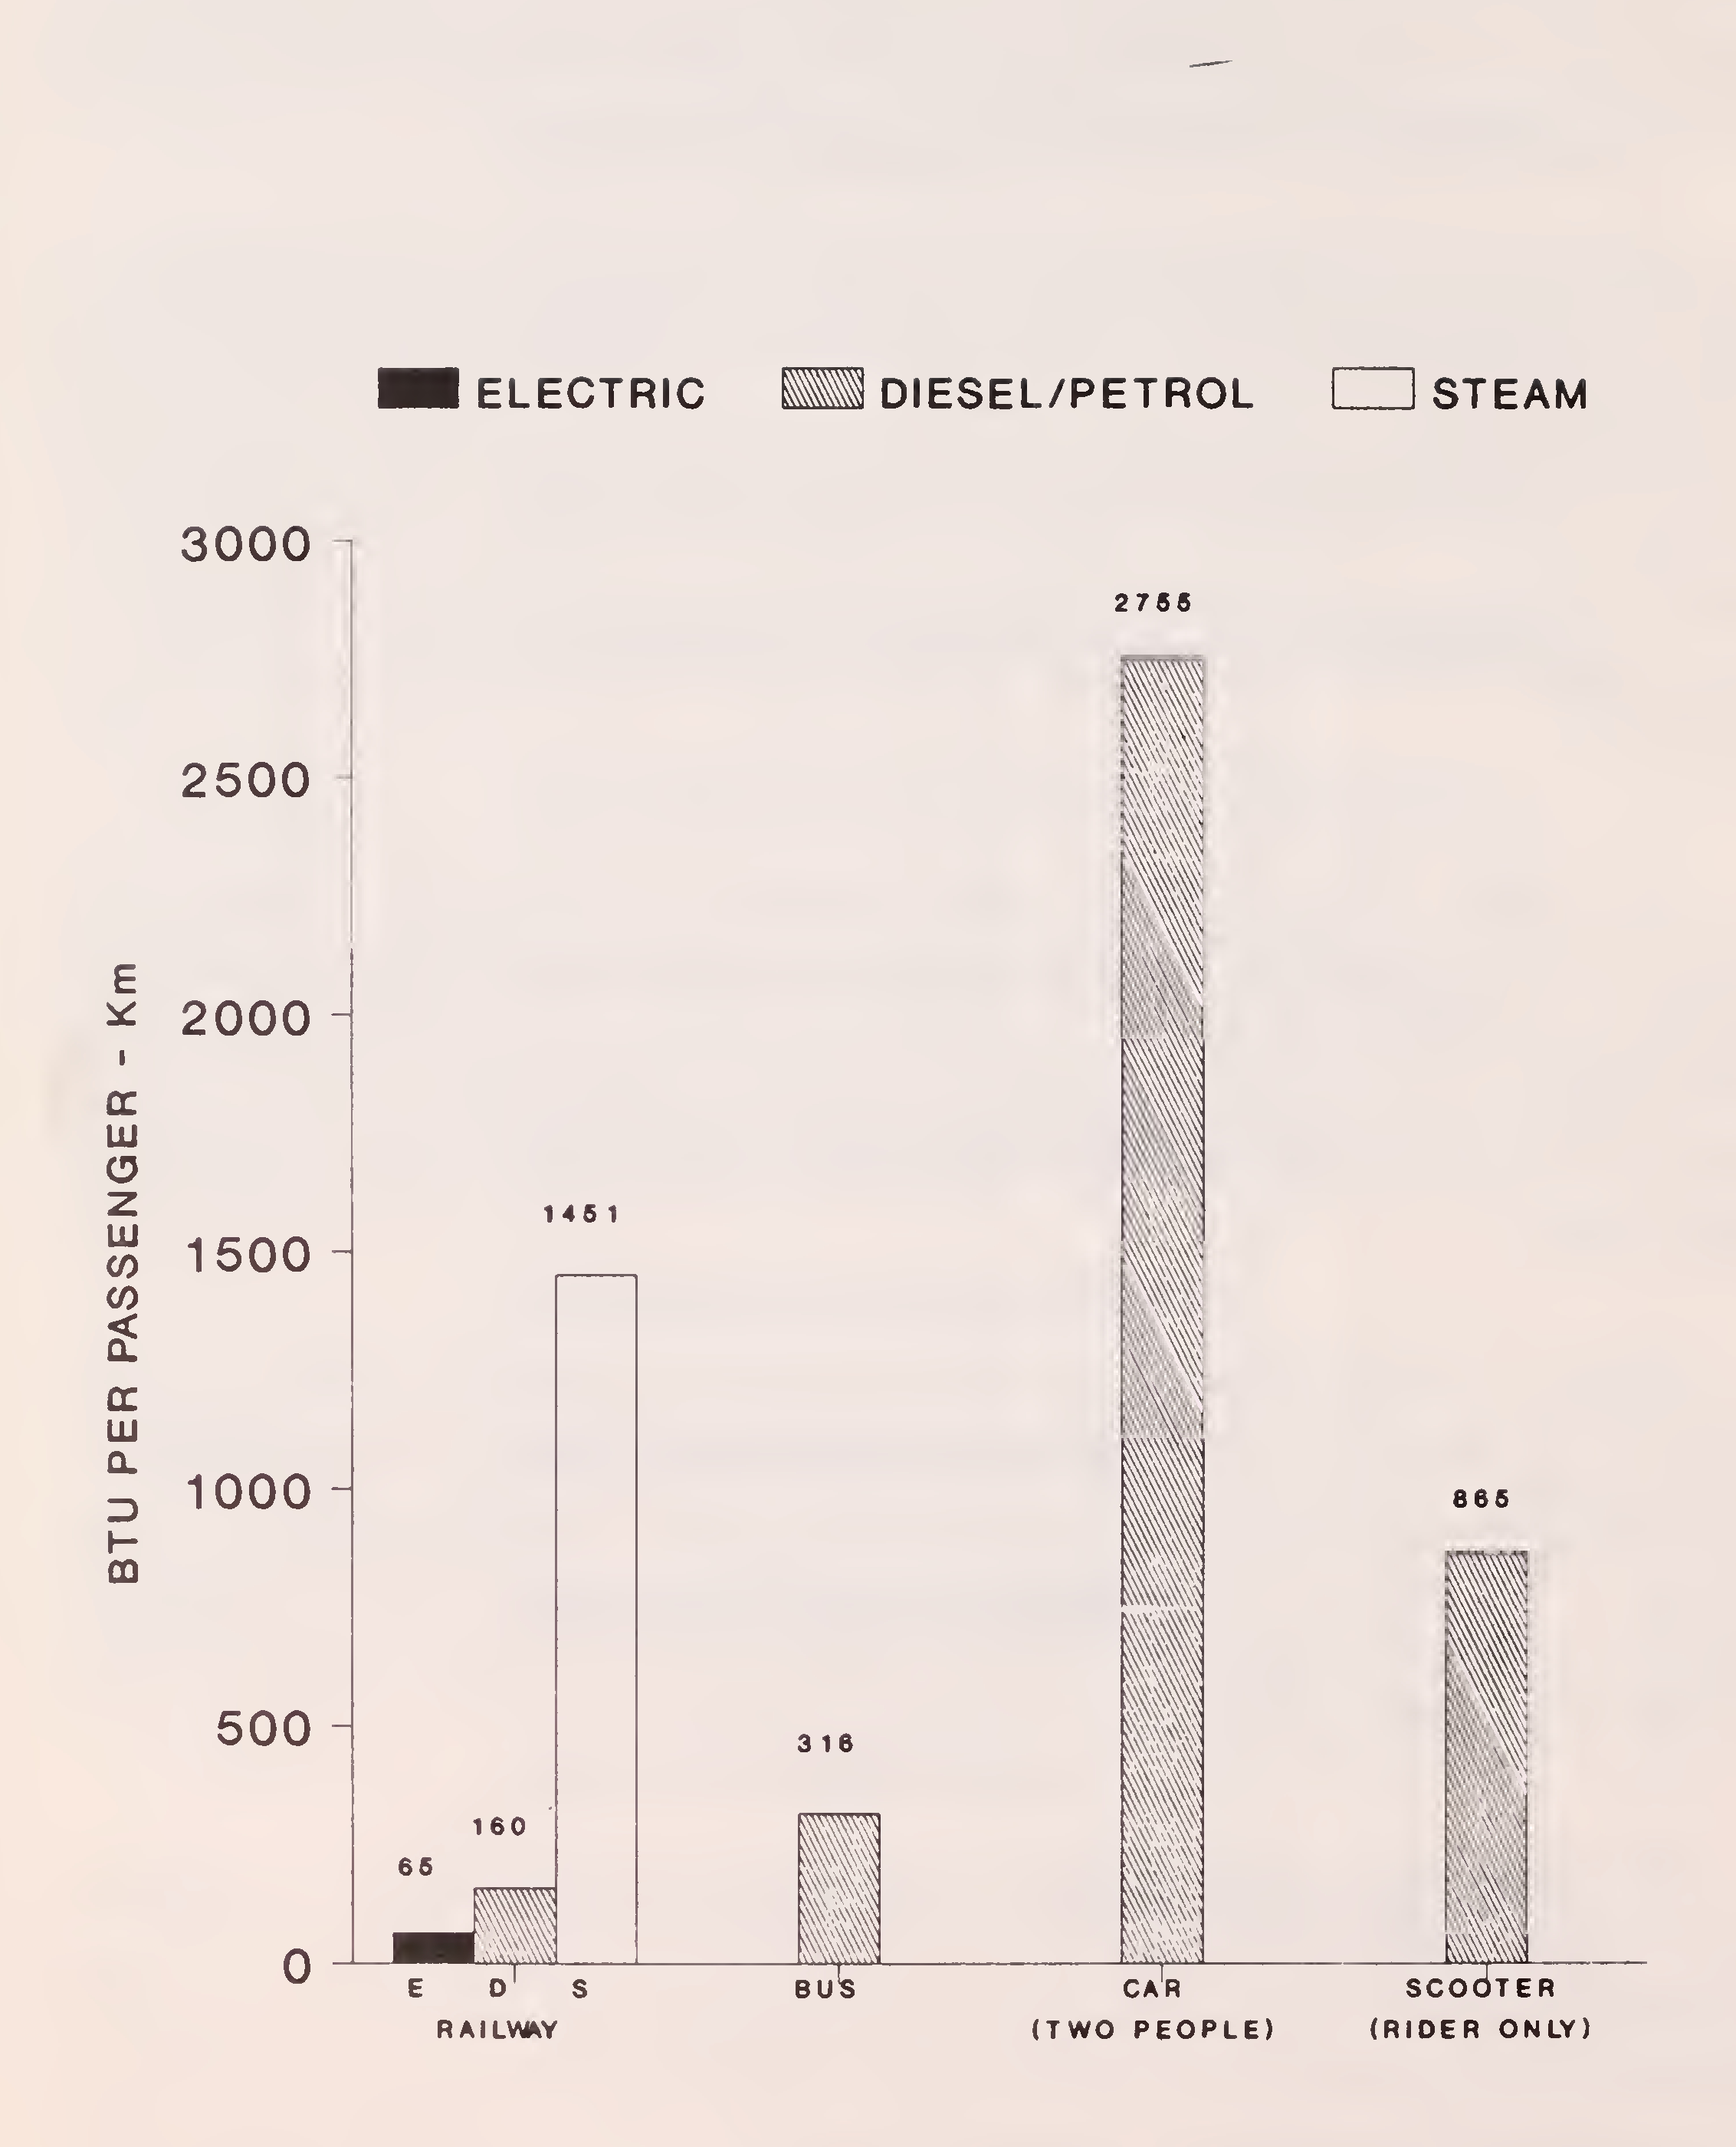 Fig. 15. Passenger mode energy intensities